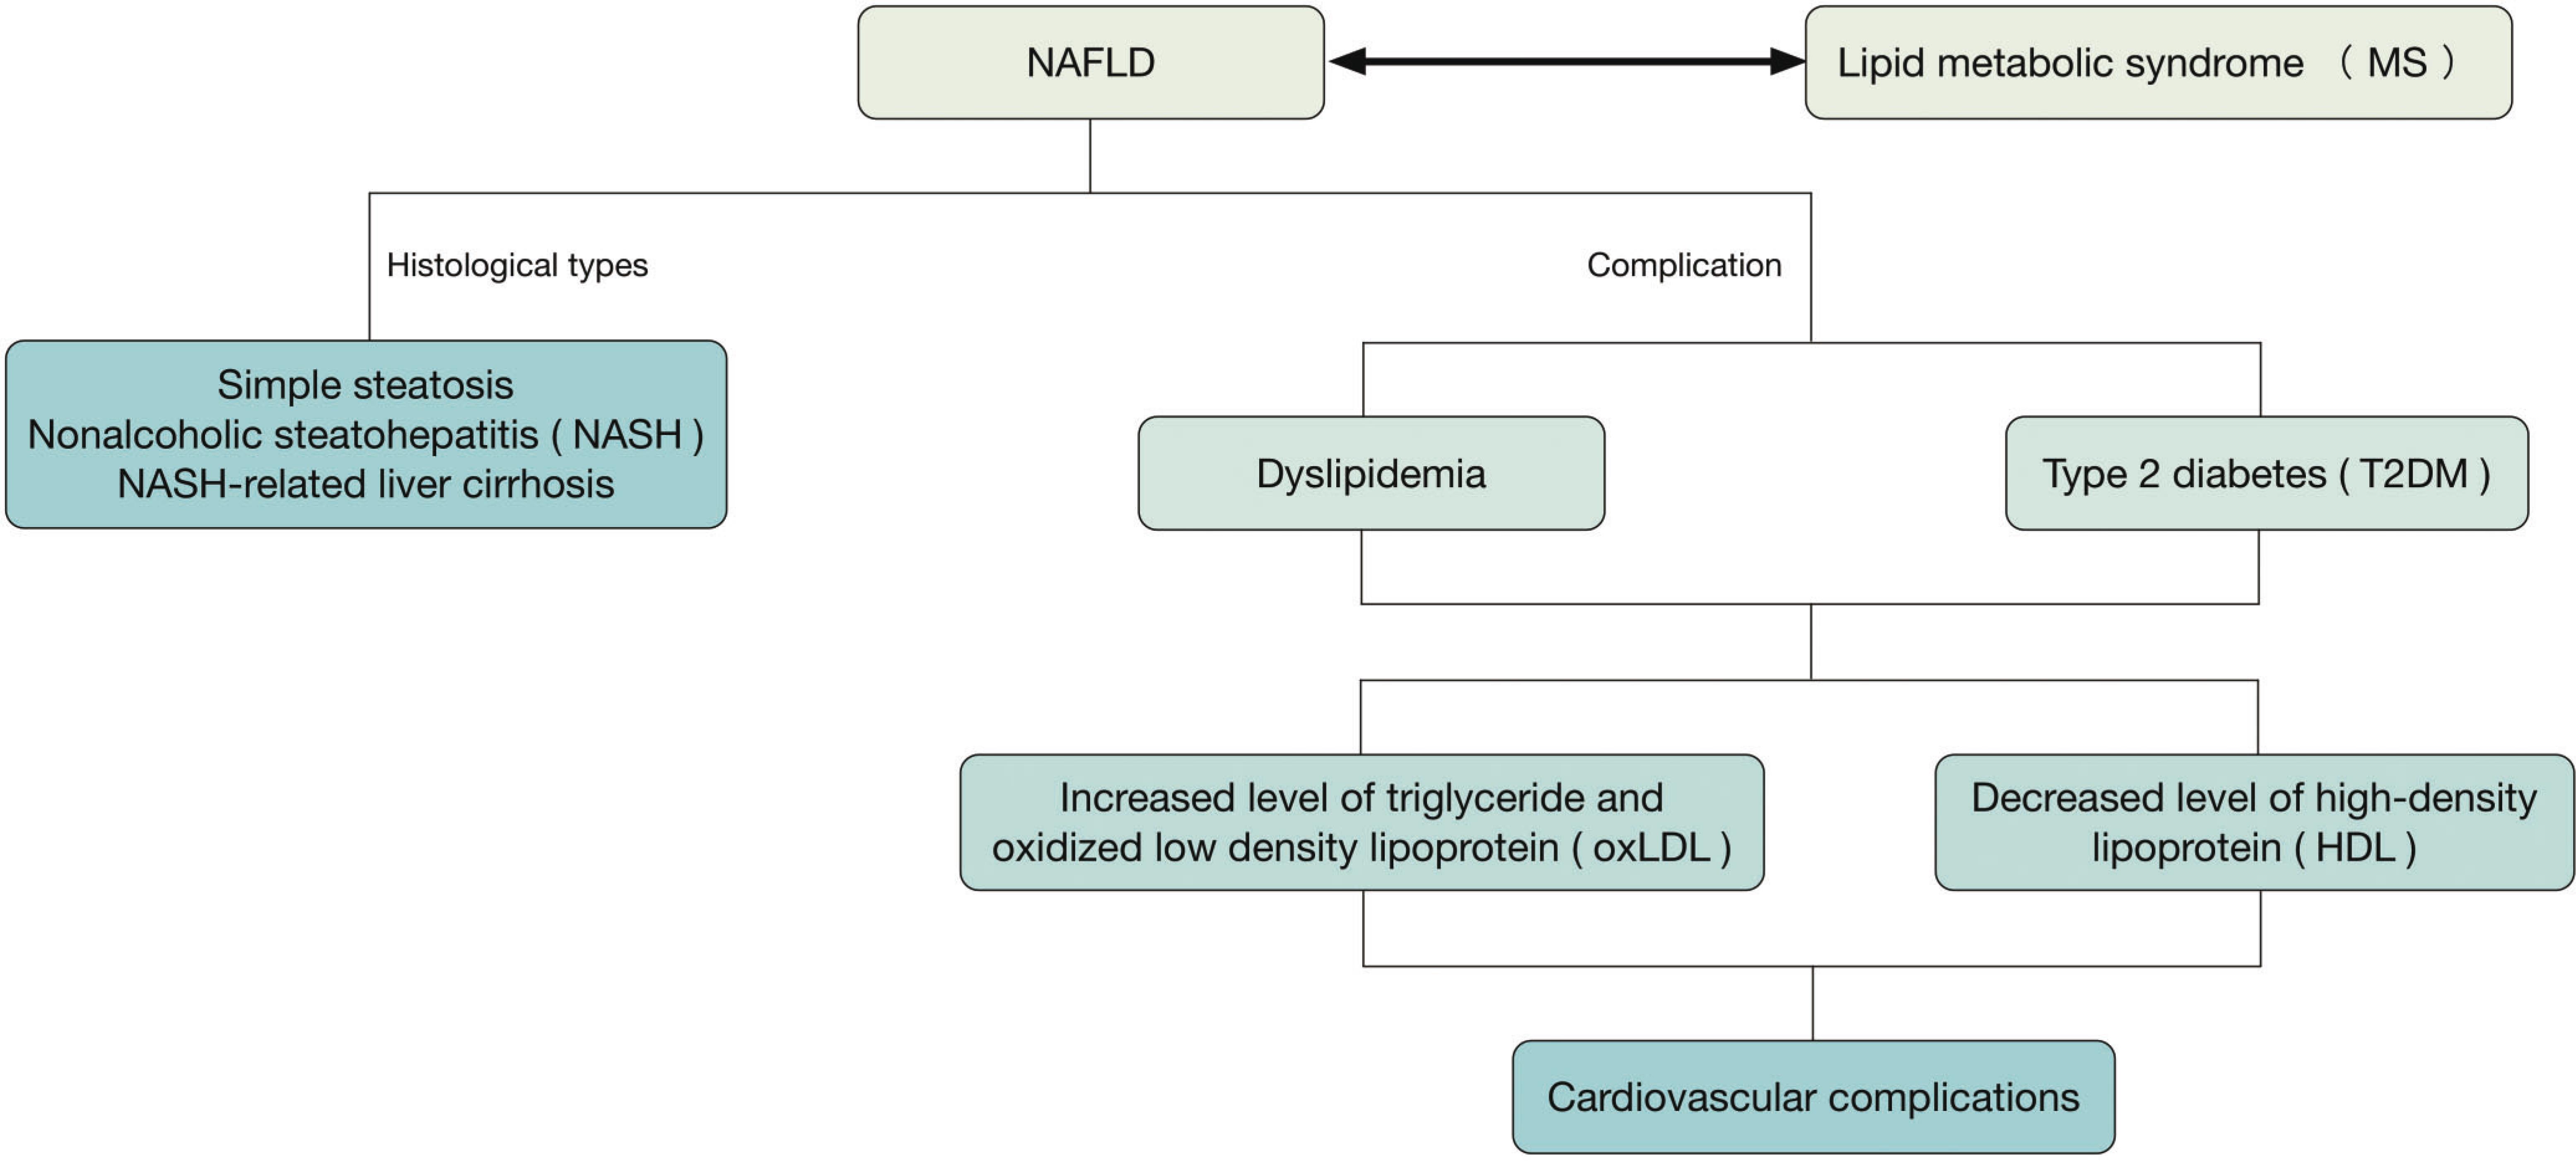 The interrelationship among NAFLD, NASH, dyslipidemia, MS, and cardiovascular complications.